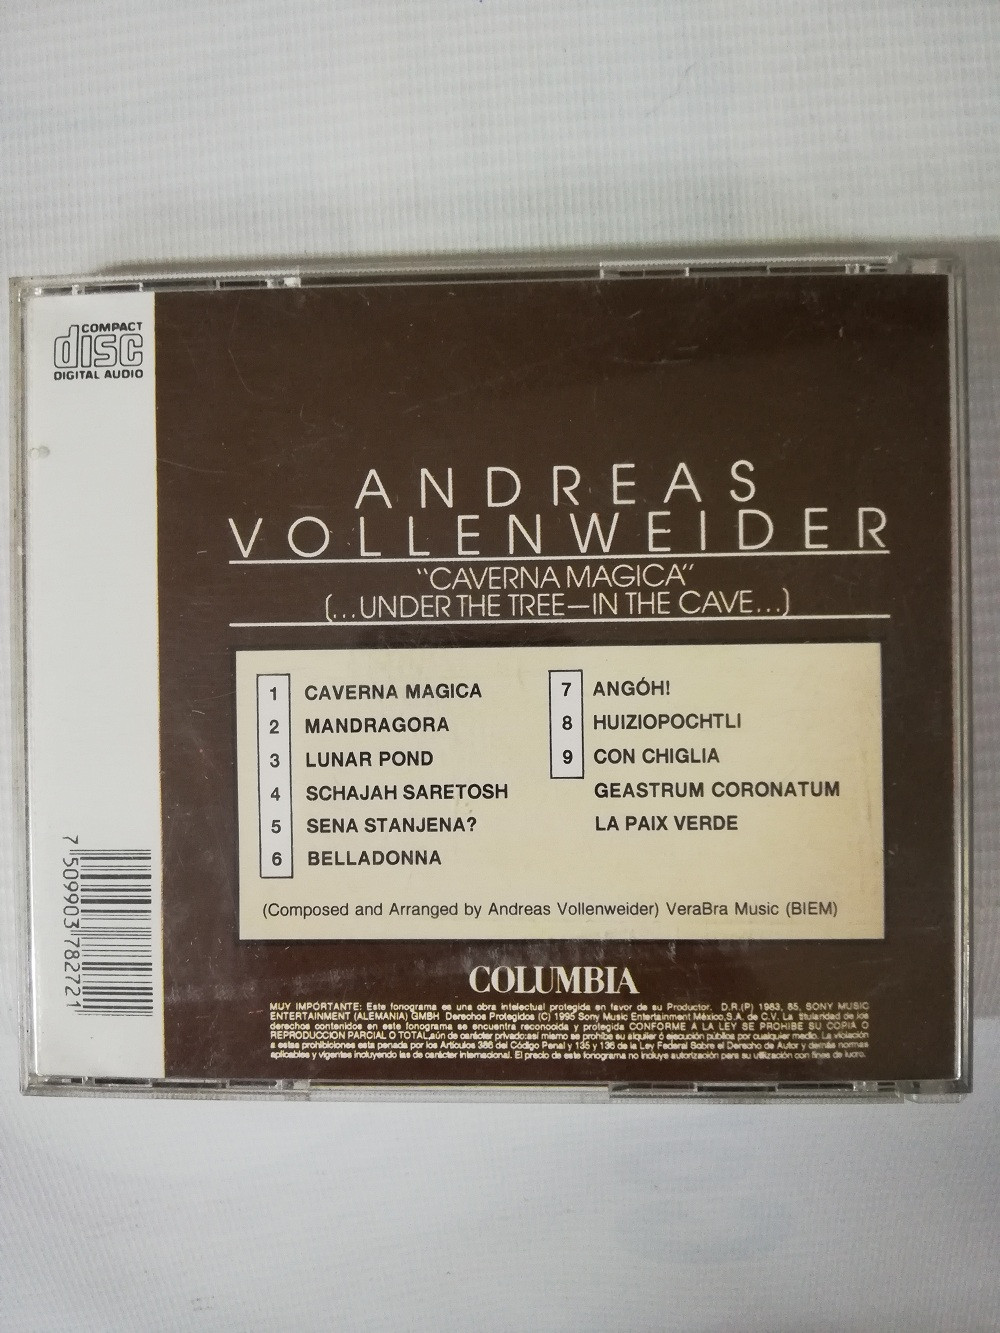 Imagen CD ANDREAS VOLLENWEIDER - CAVERNA MÁGICA 2